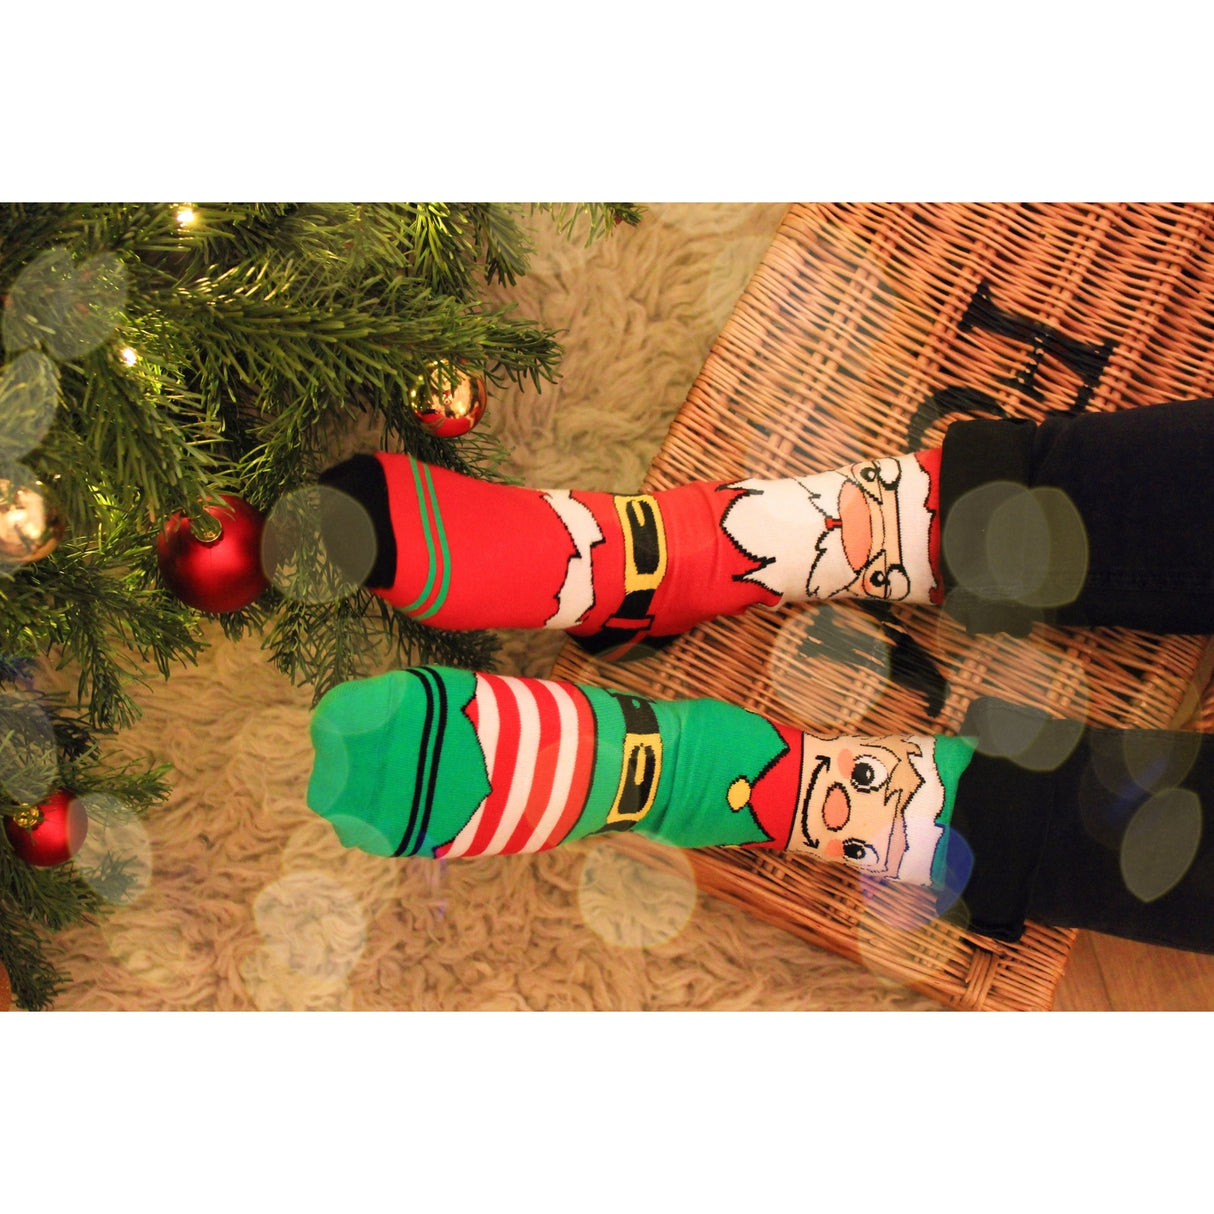 Santa Banter Weihnachten Oddsocks Socken in 39-46 im 6er Set